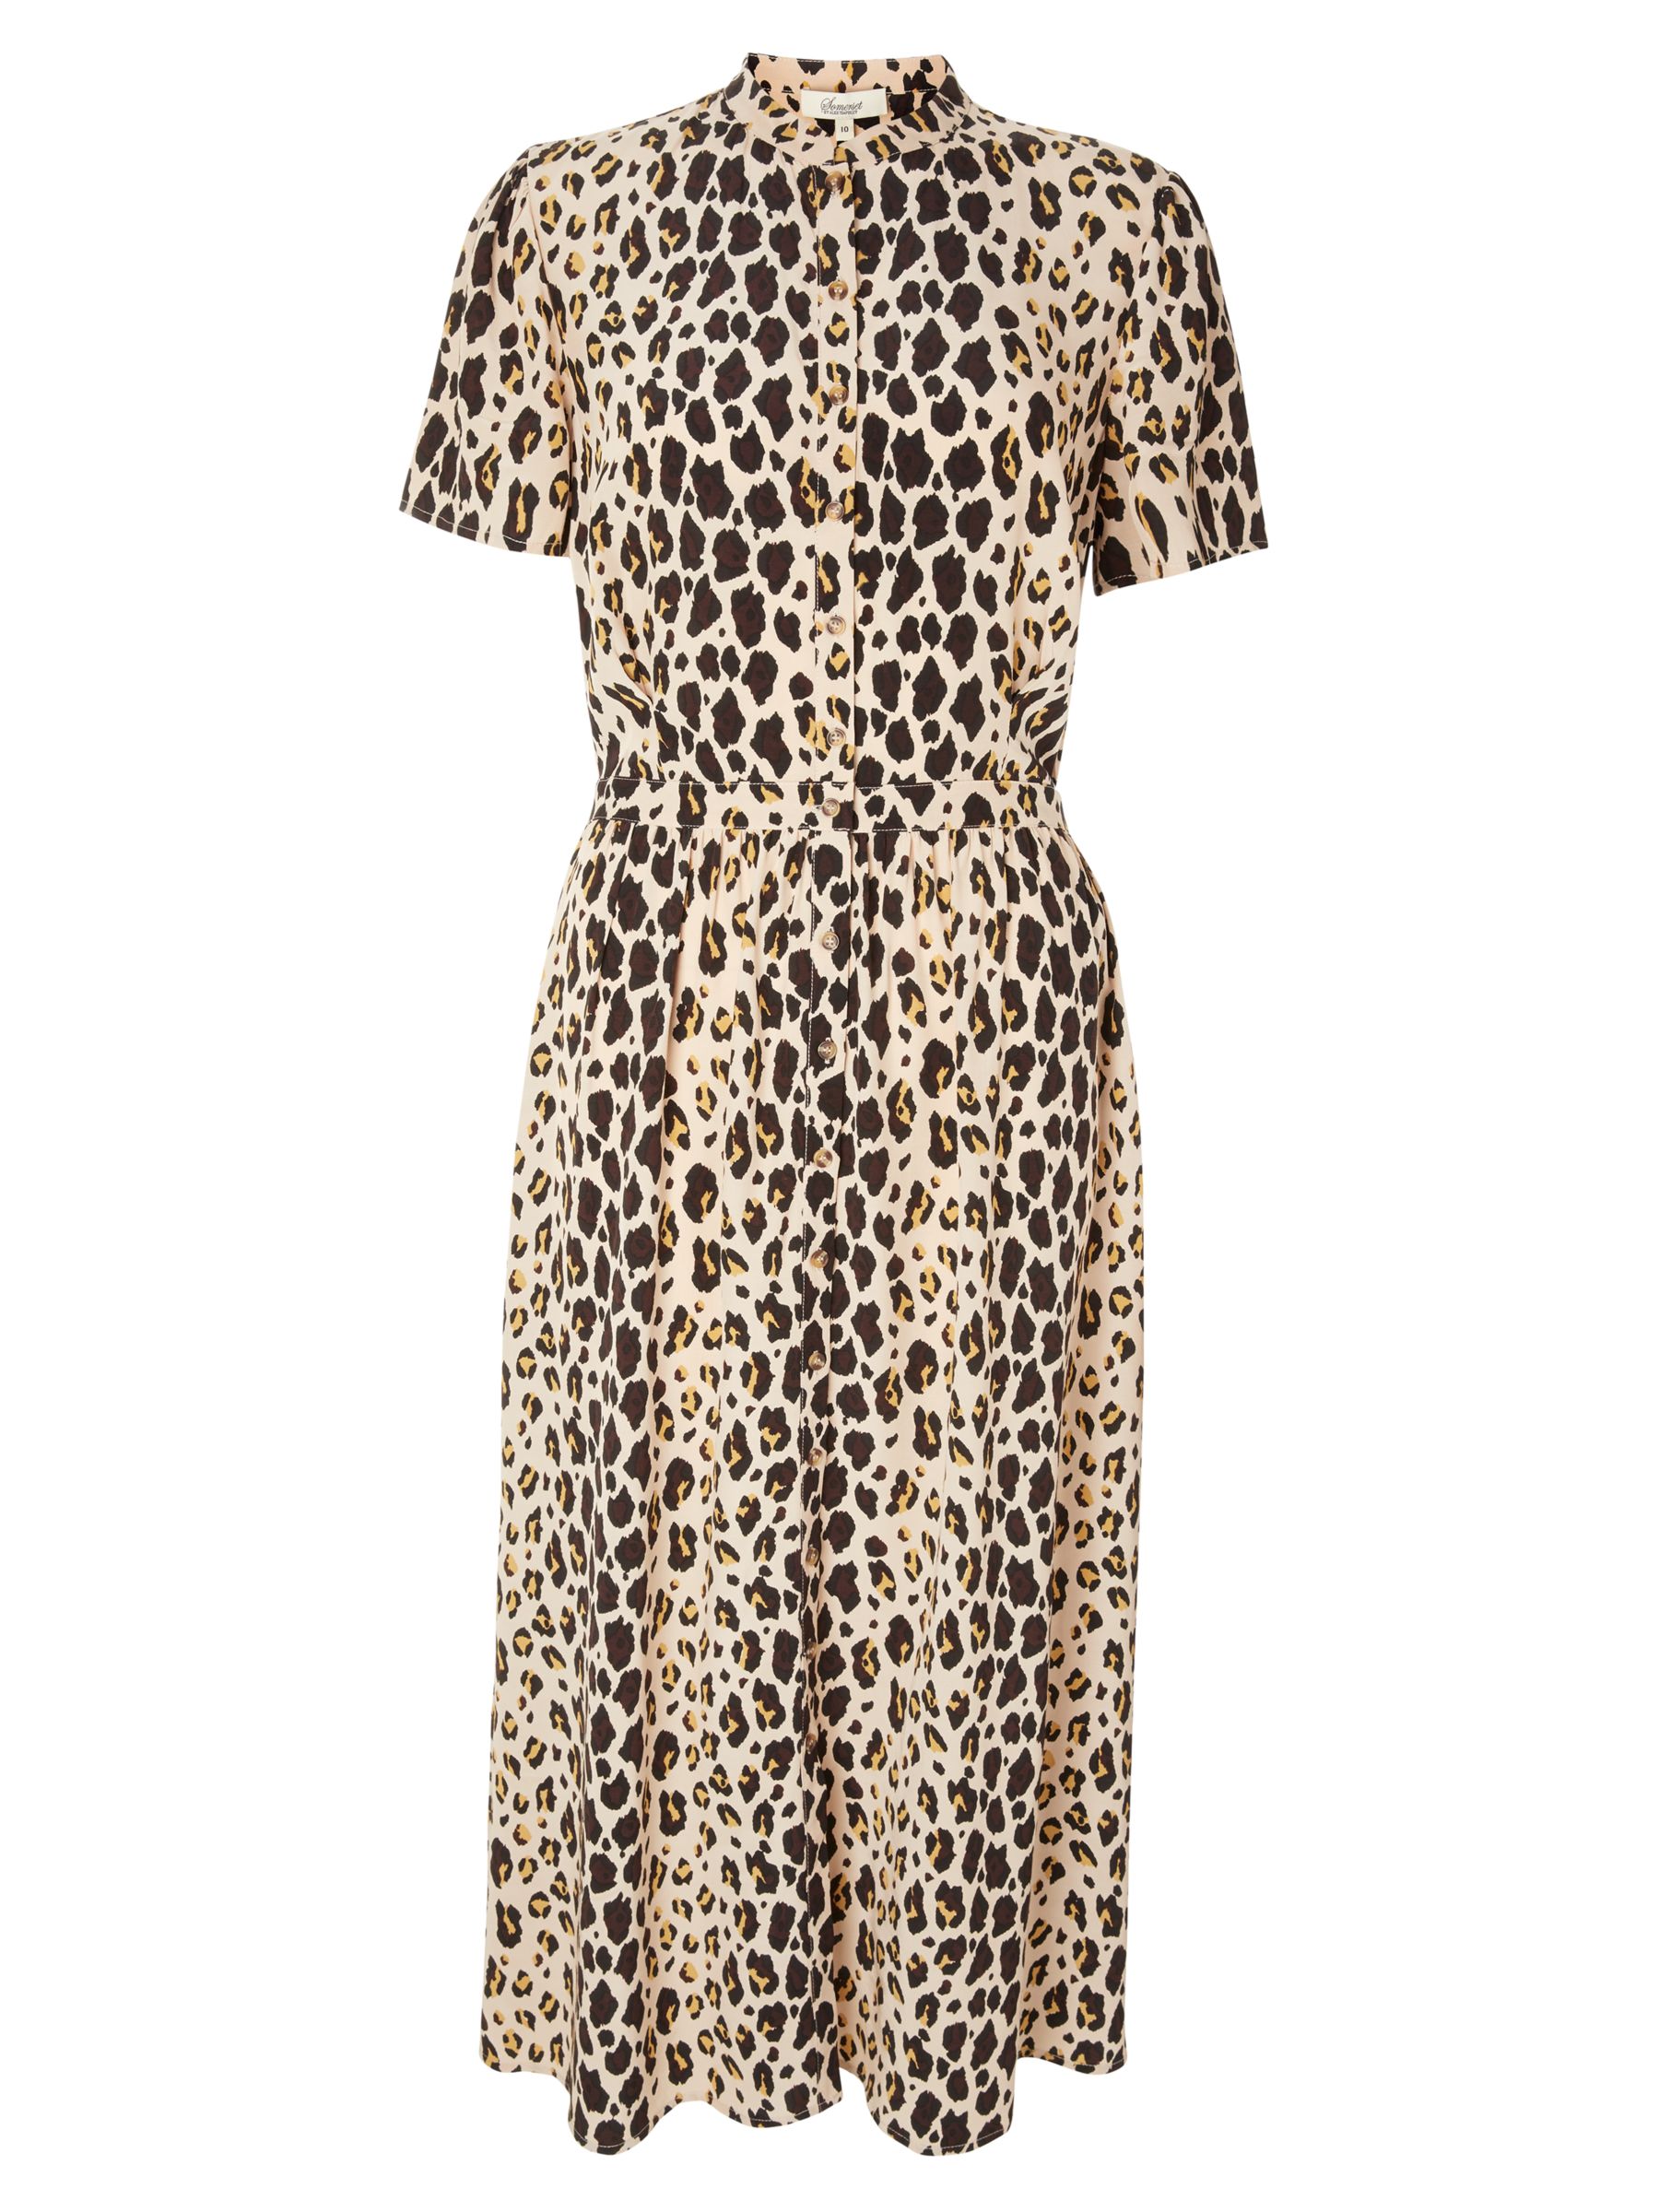 Somerset by Alice Temperley Leopard Print Shirt Dress, Multi